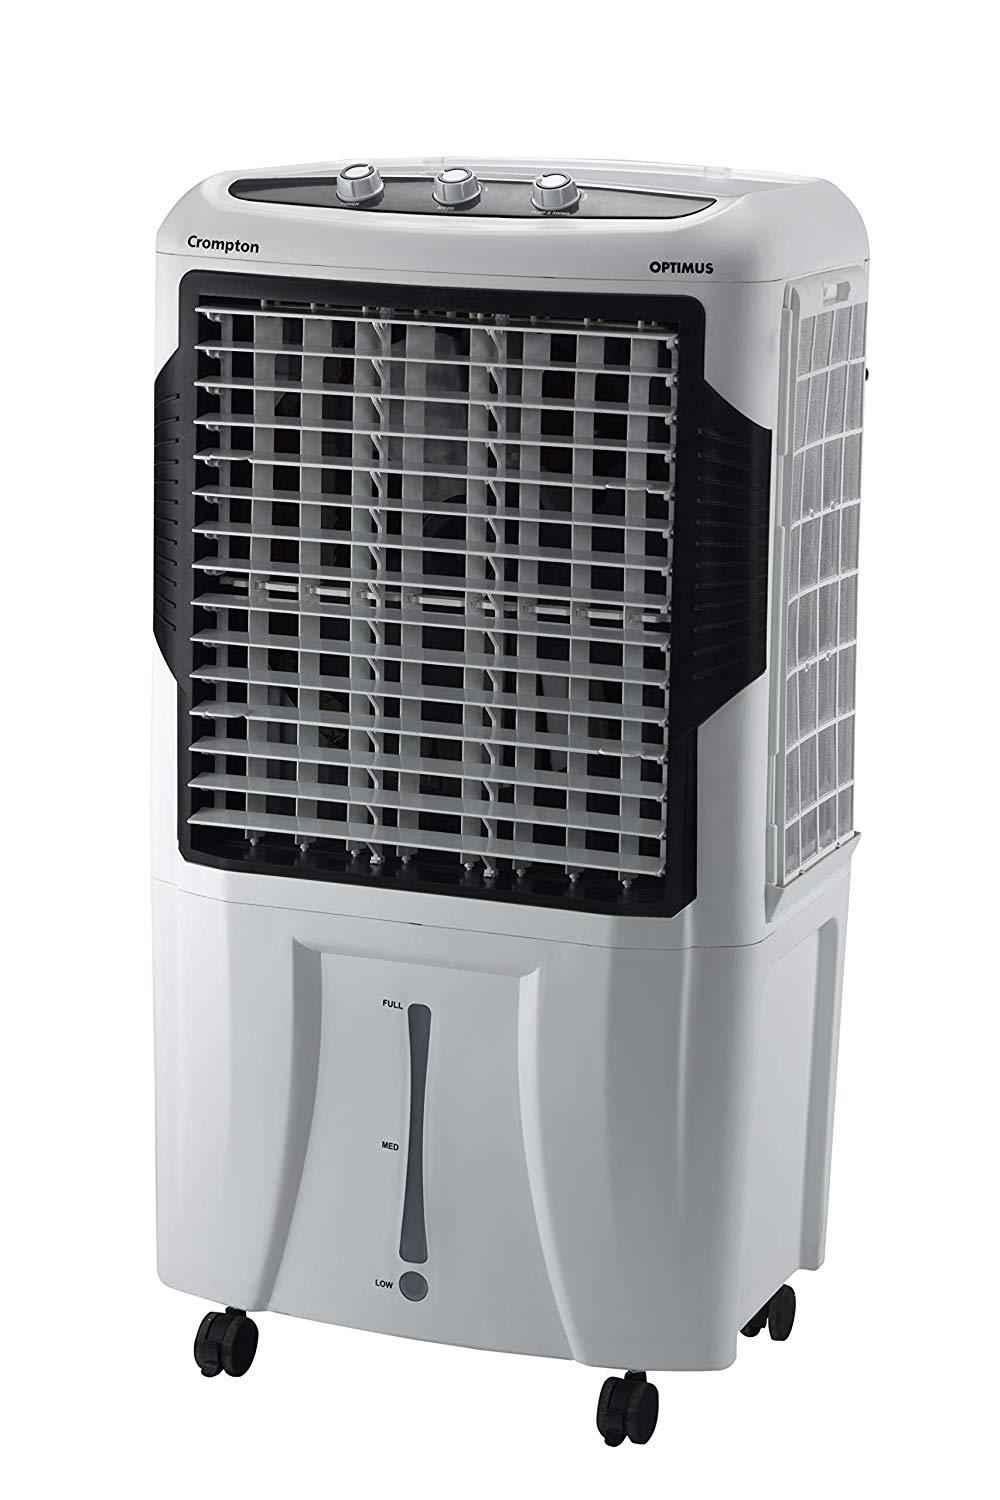 crompton greaves air cooler price